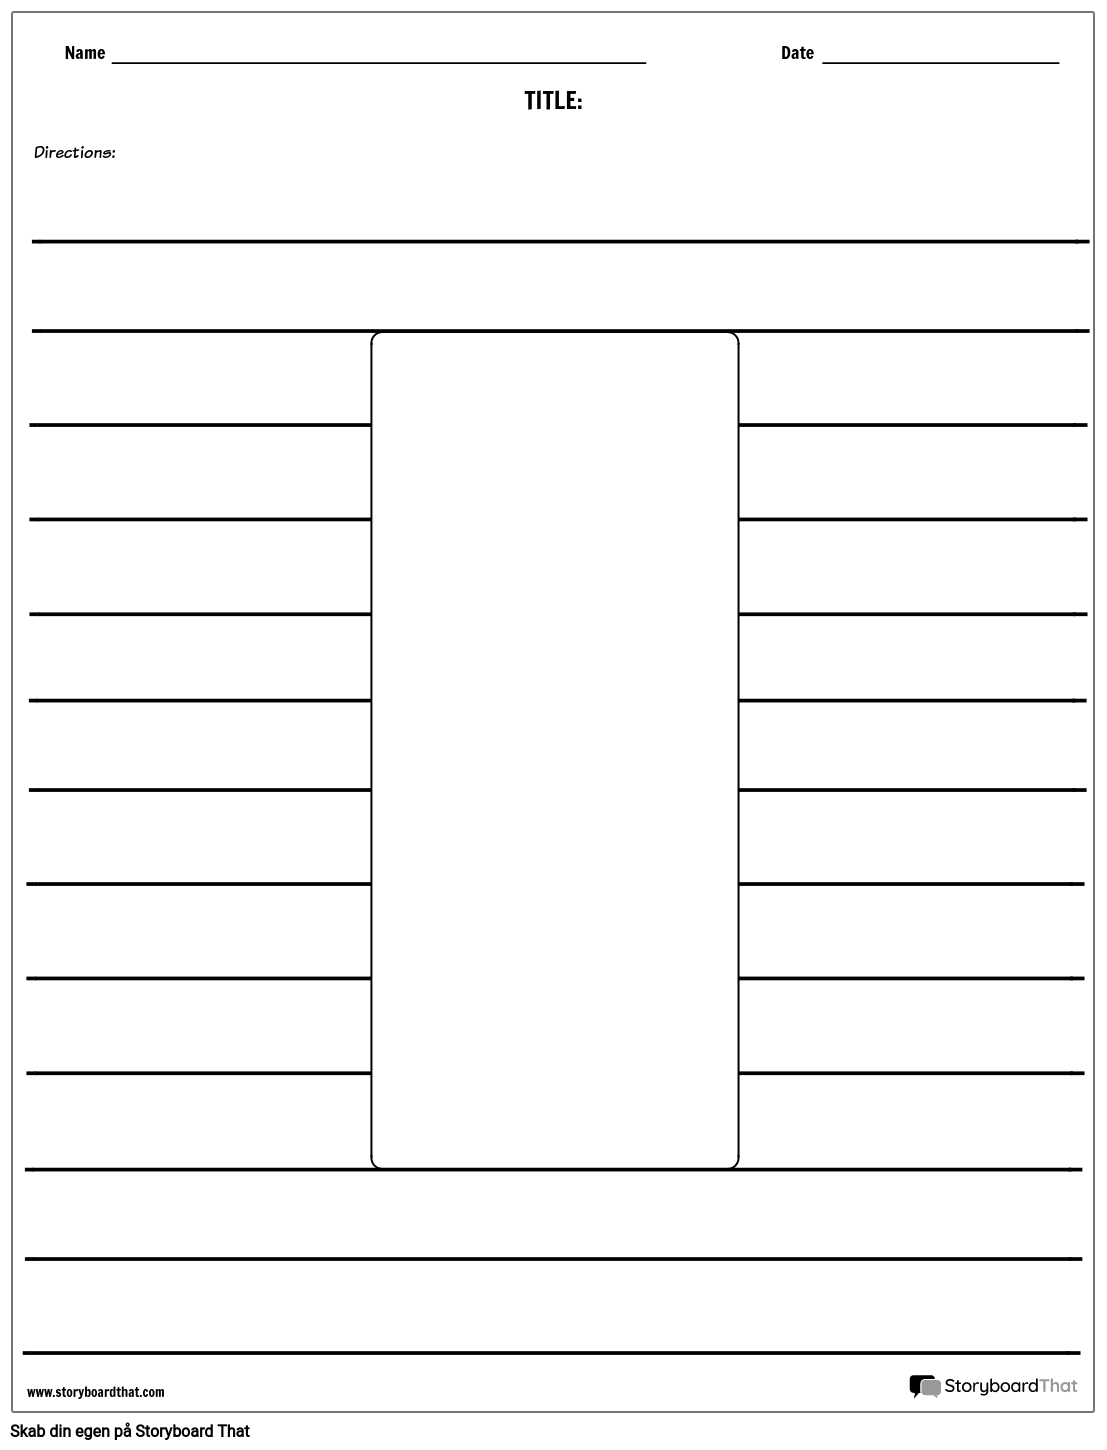 Rektangel, Illustration